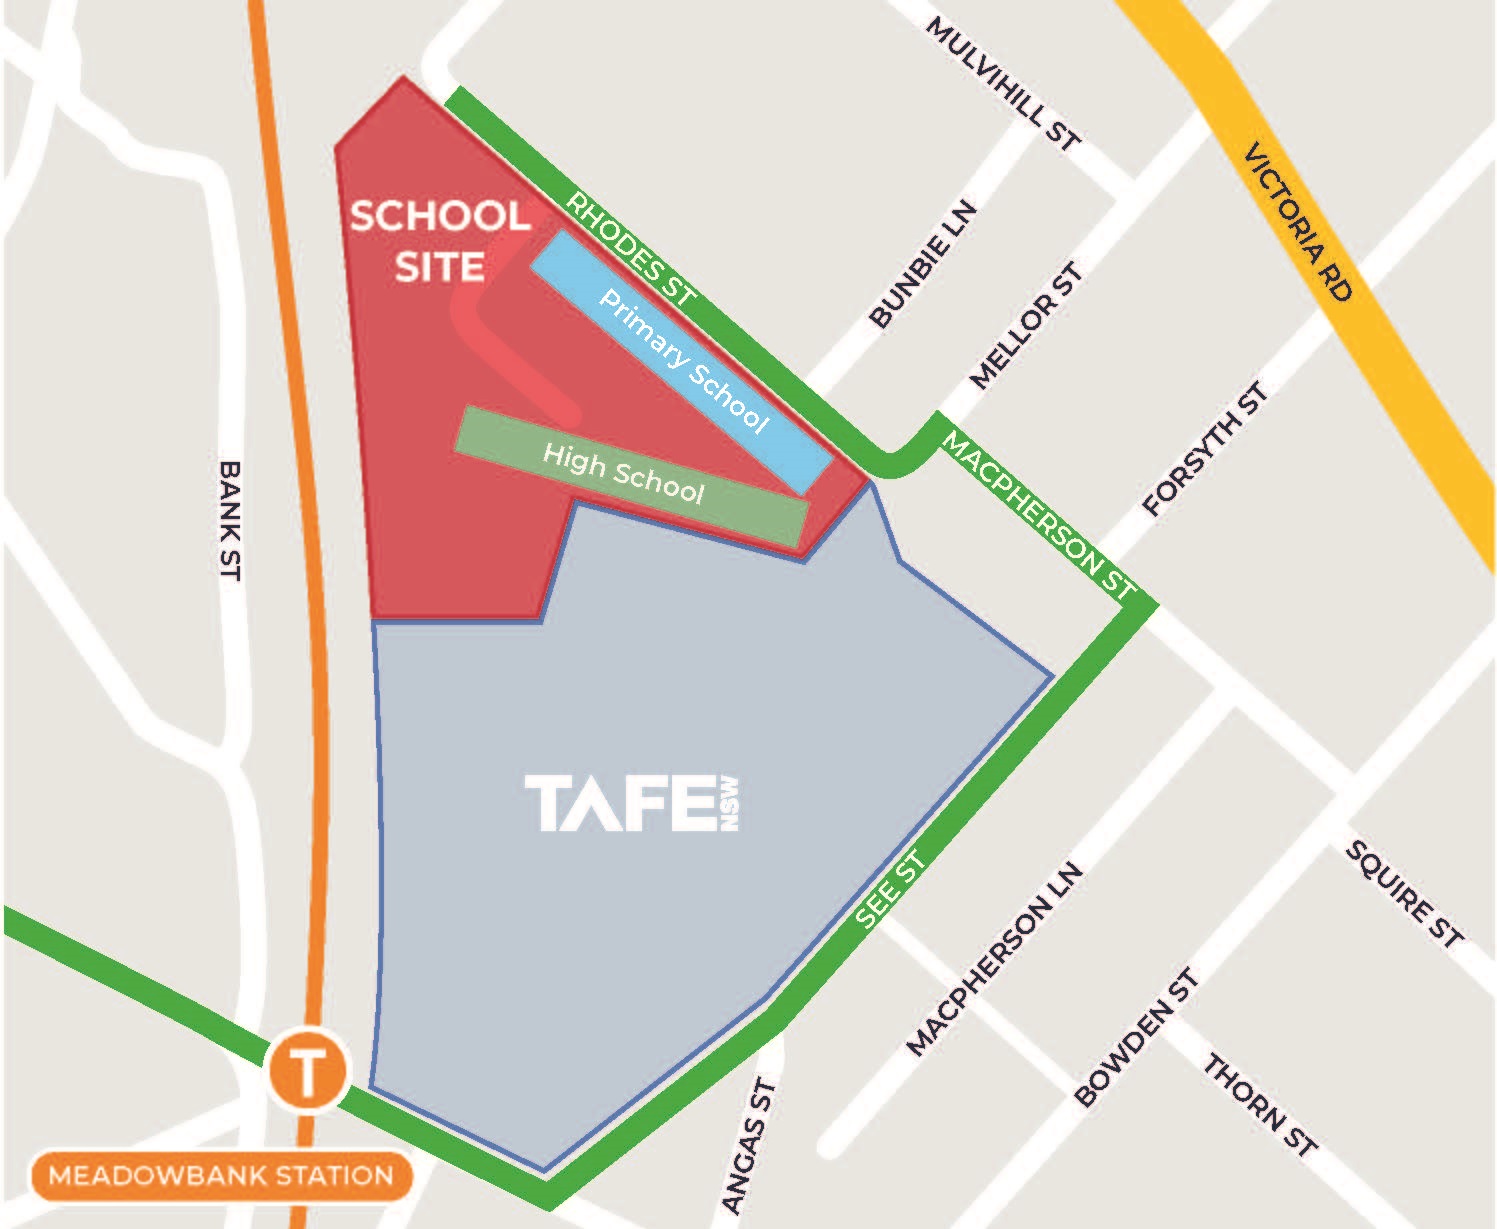 MEEP school site map